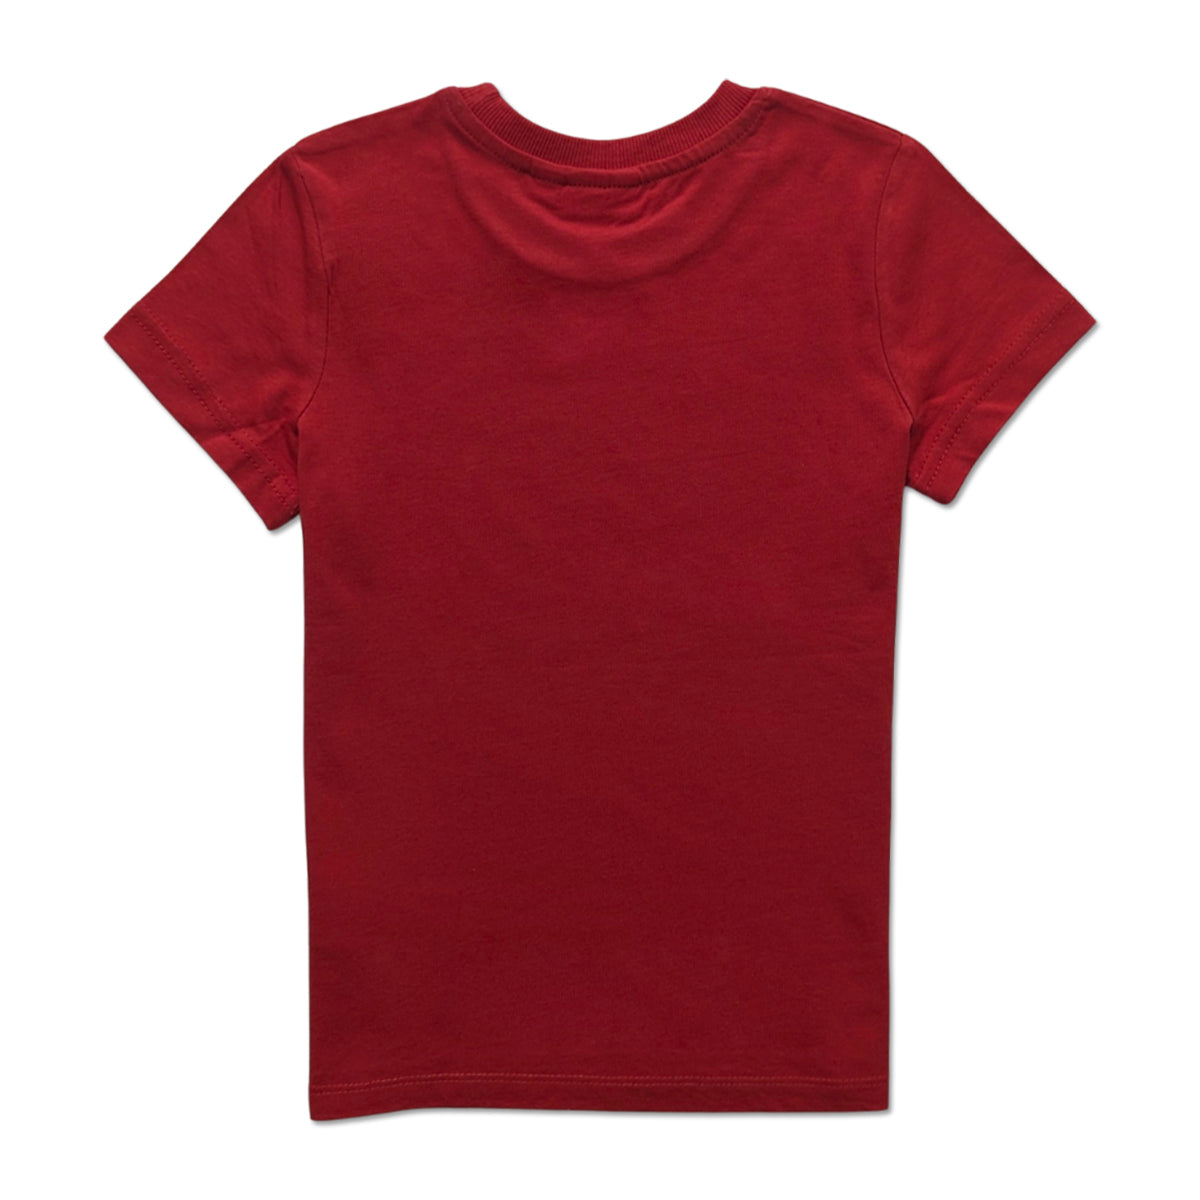 Brand Expo Premium Quality Branded Half Sleeves T-Shirt for Girl's